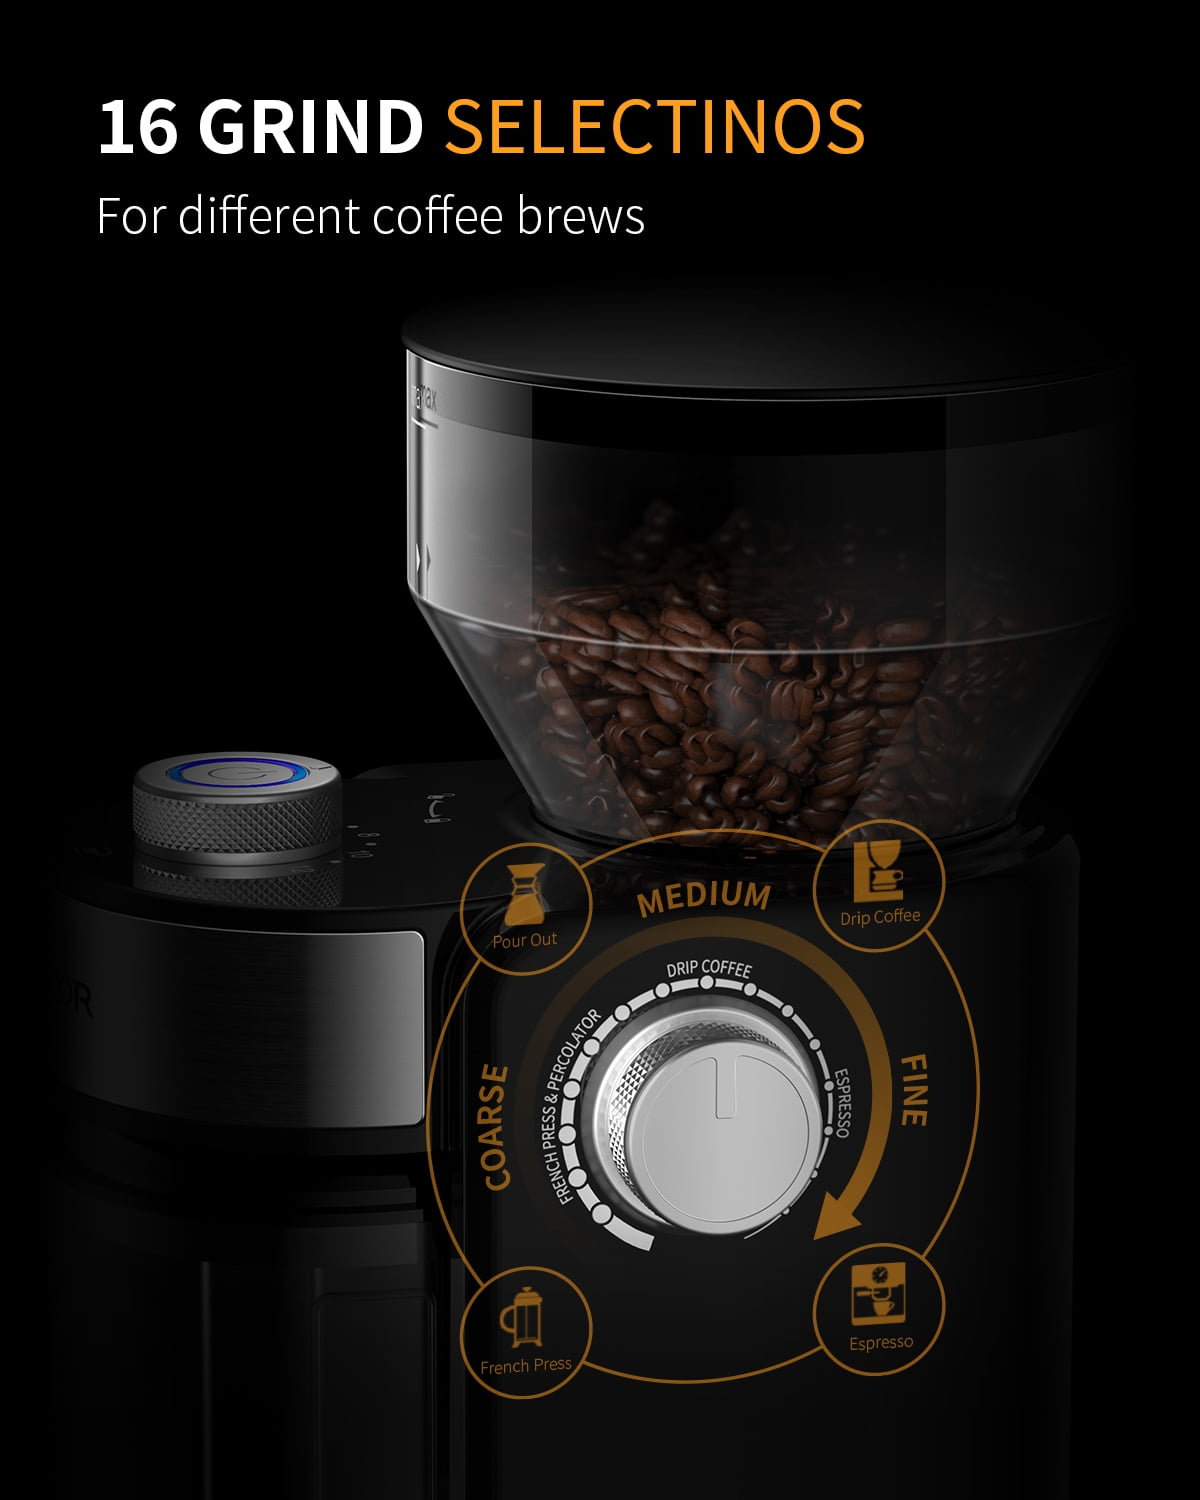 Regalia Electric Coffee Grinder | Burr Grinder | 31 Grinding Settings | Set  Variable Coffee Texture, Fine, Medium, Coarse | Grind Beans for Espresso